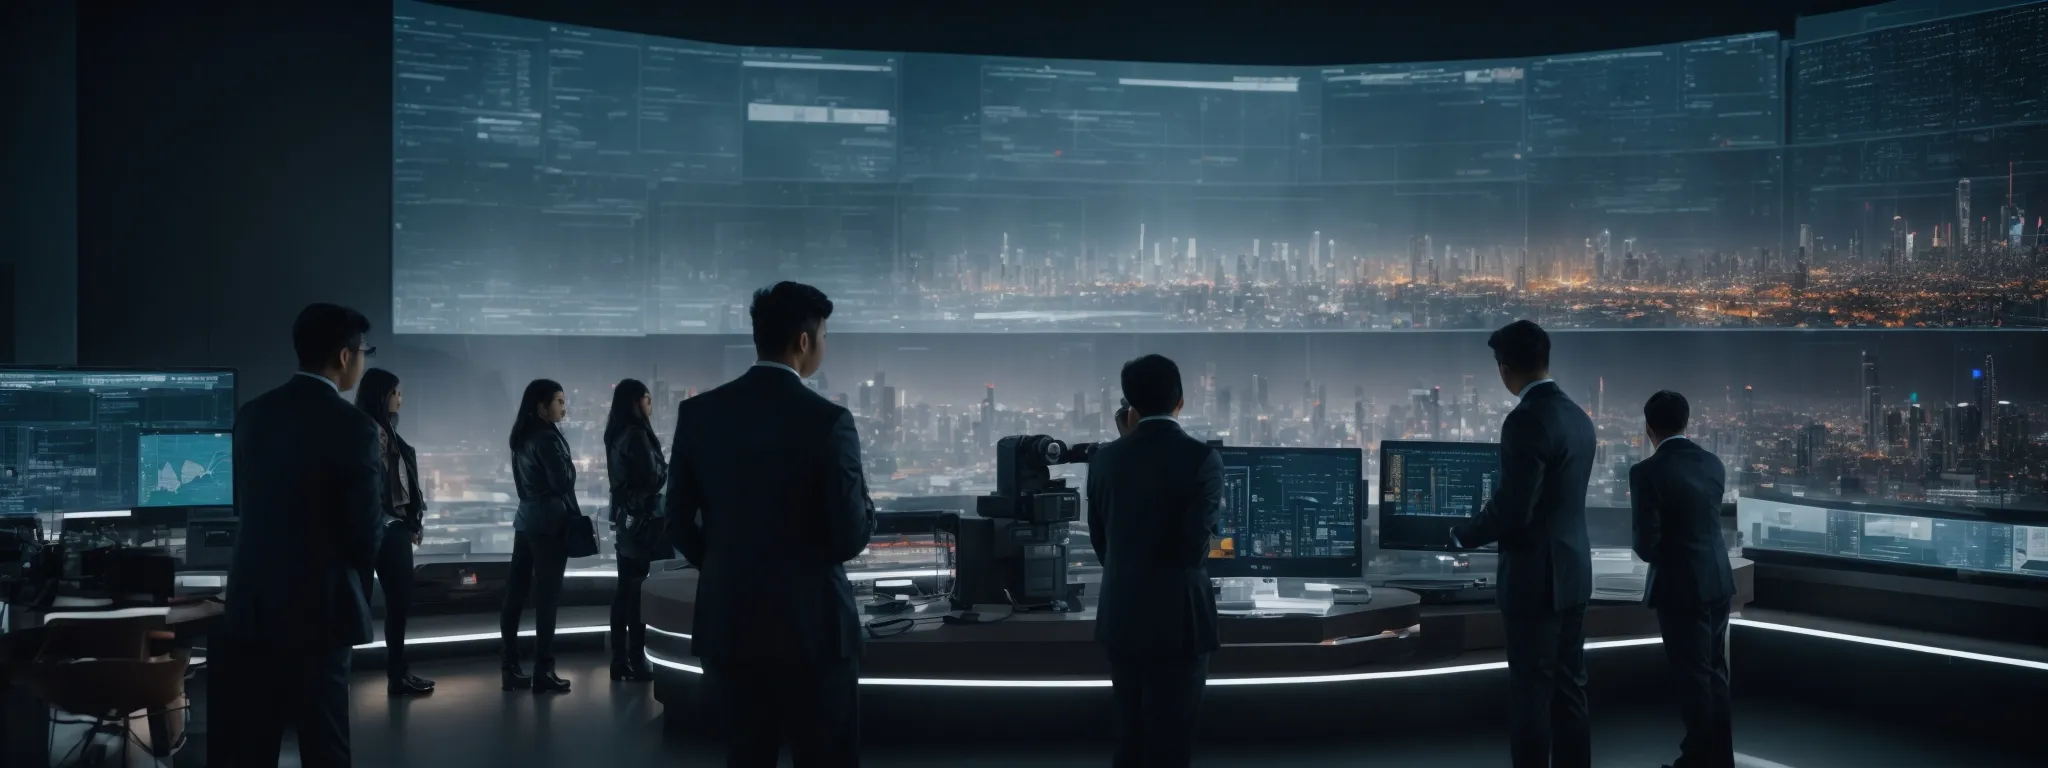 a futuristic skyline with professionals gathered around a high-tech digital analytics dashboard.